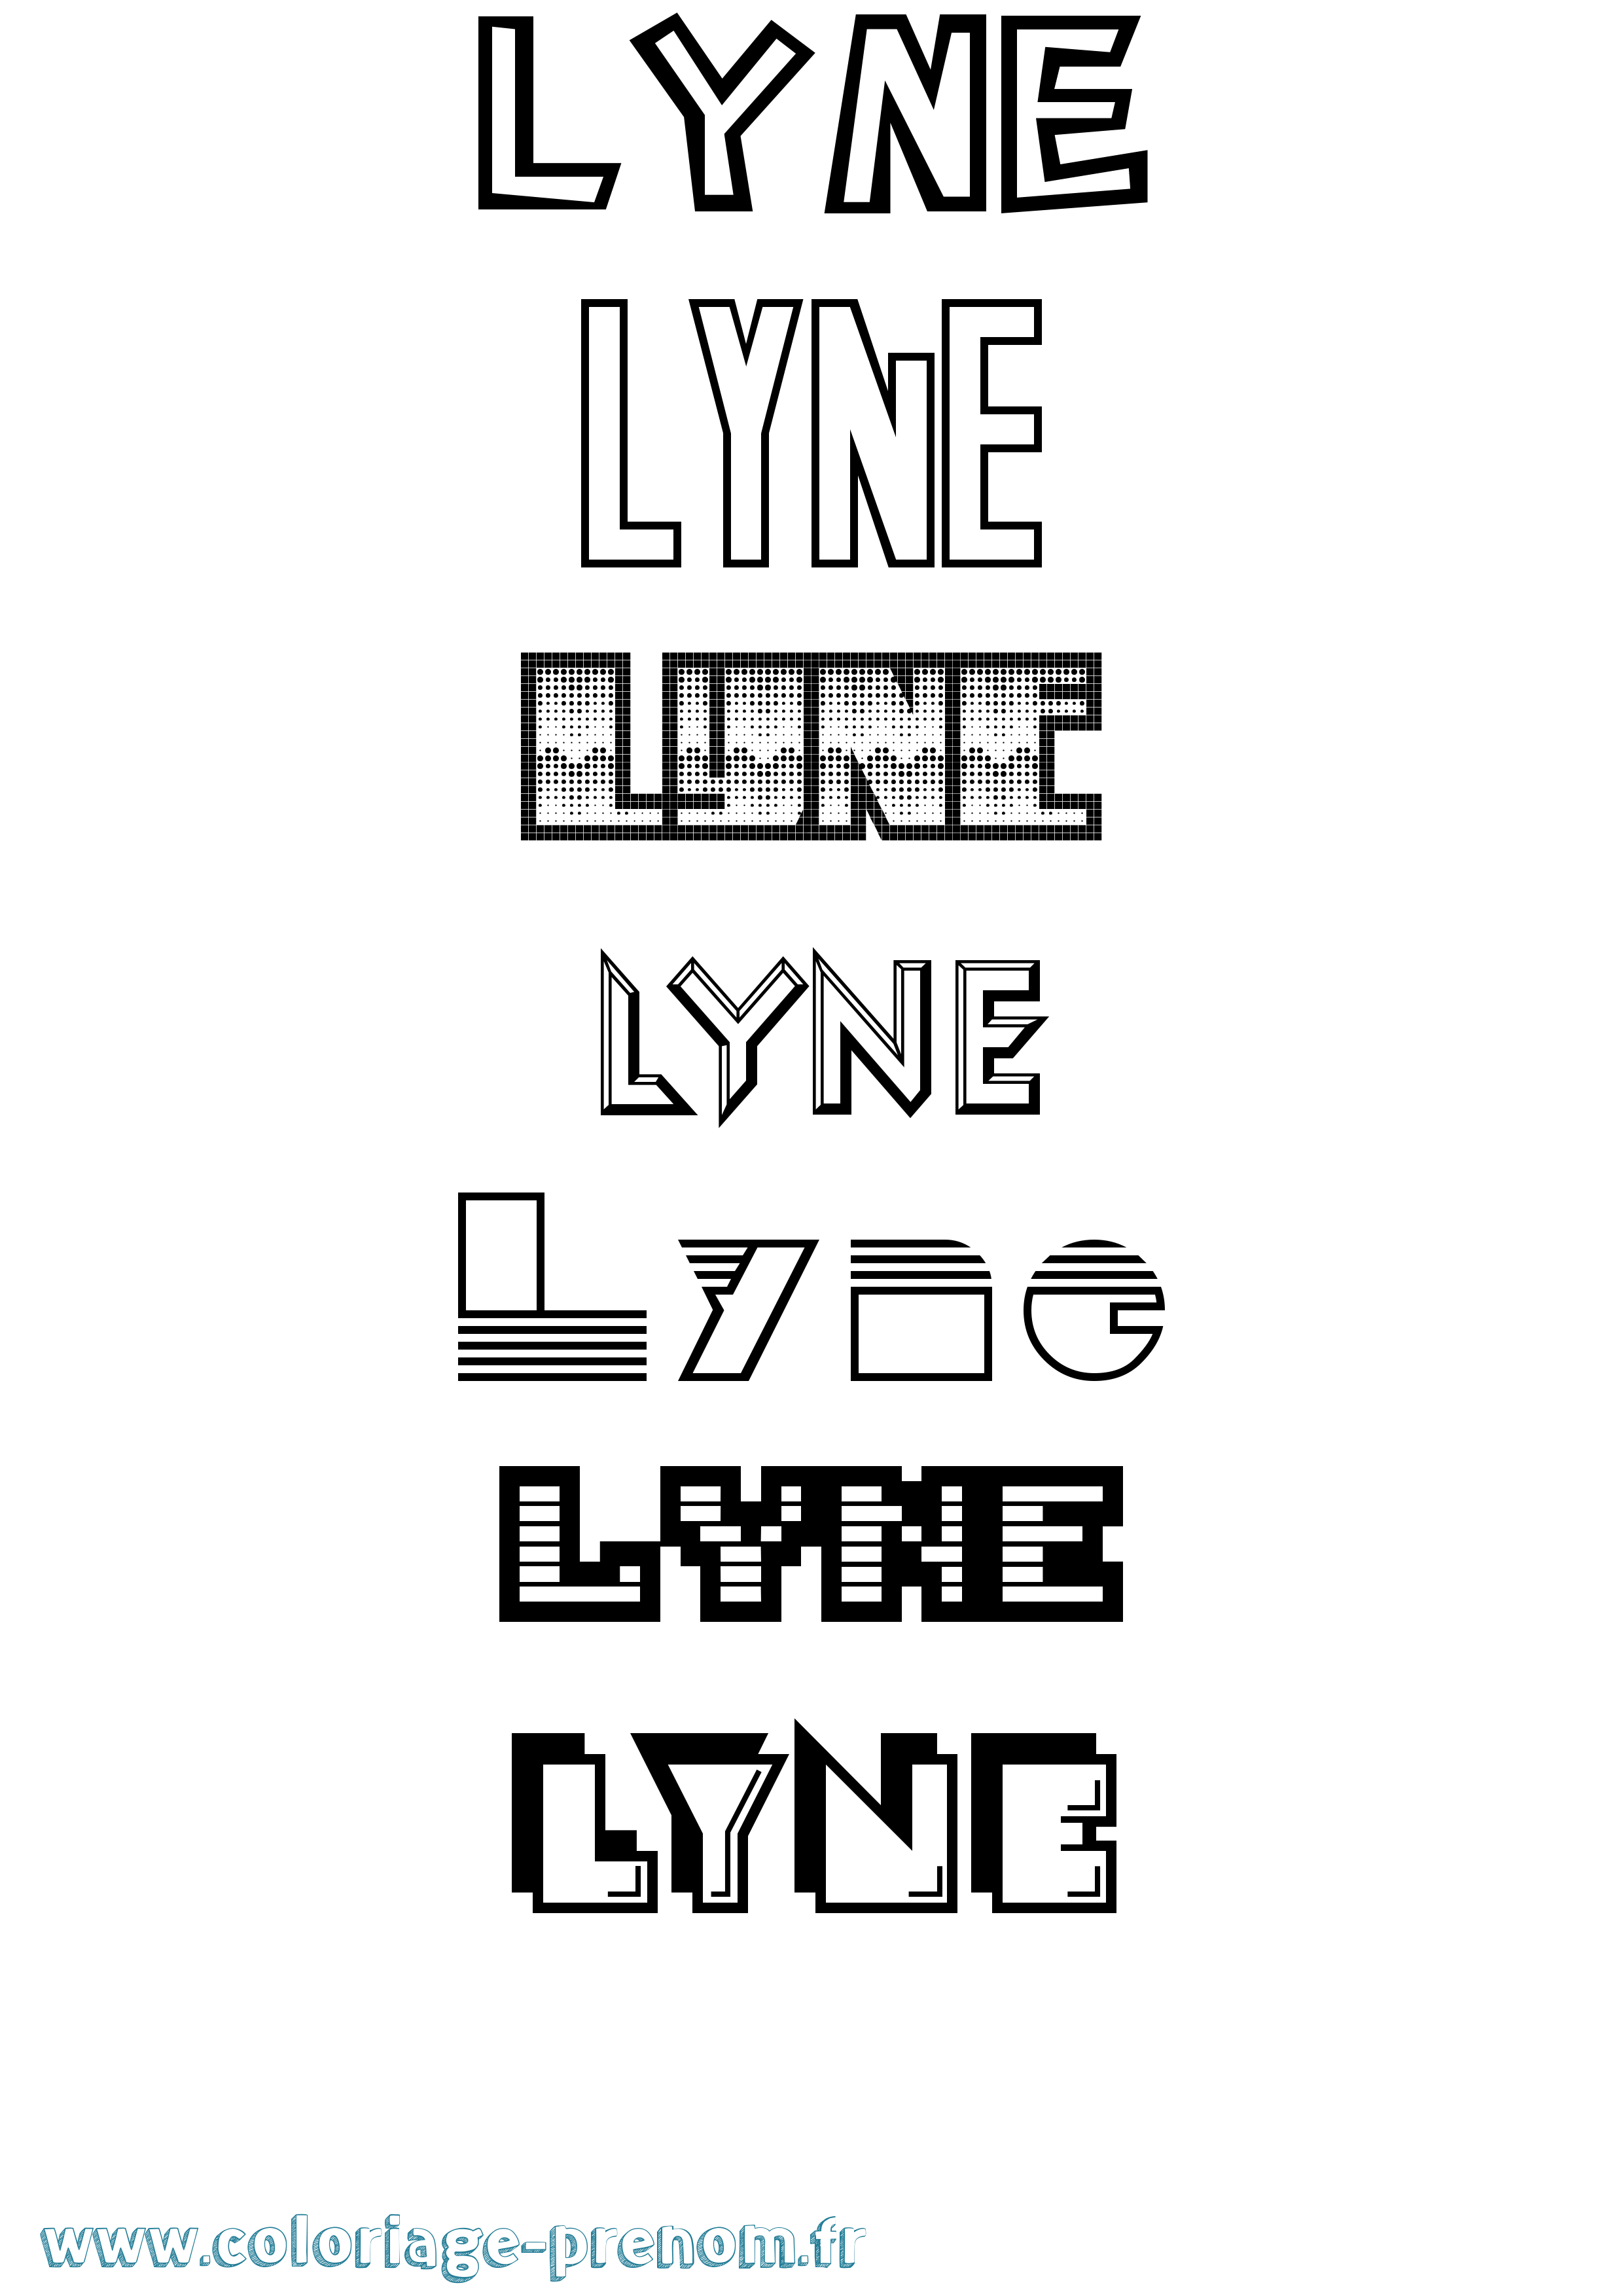 Coloriage prénom Lyne